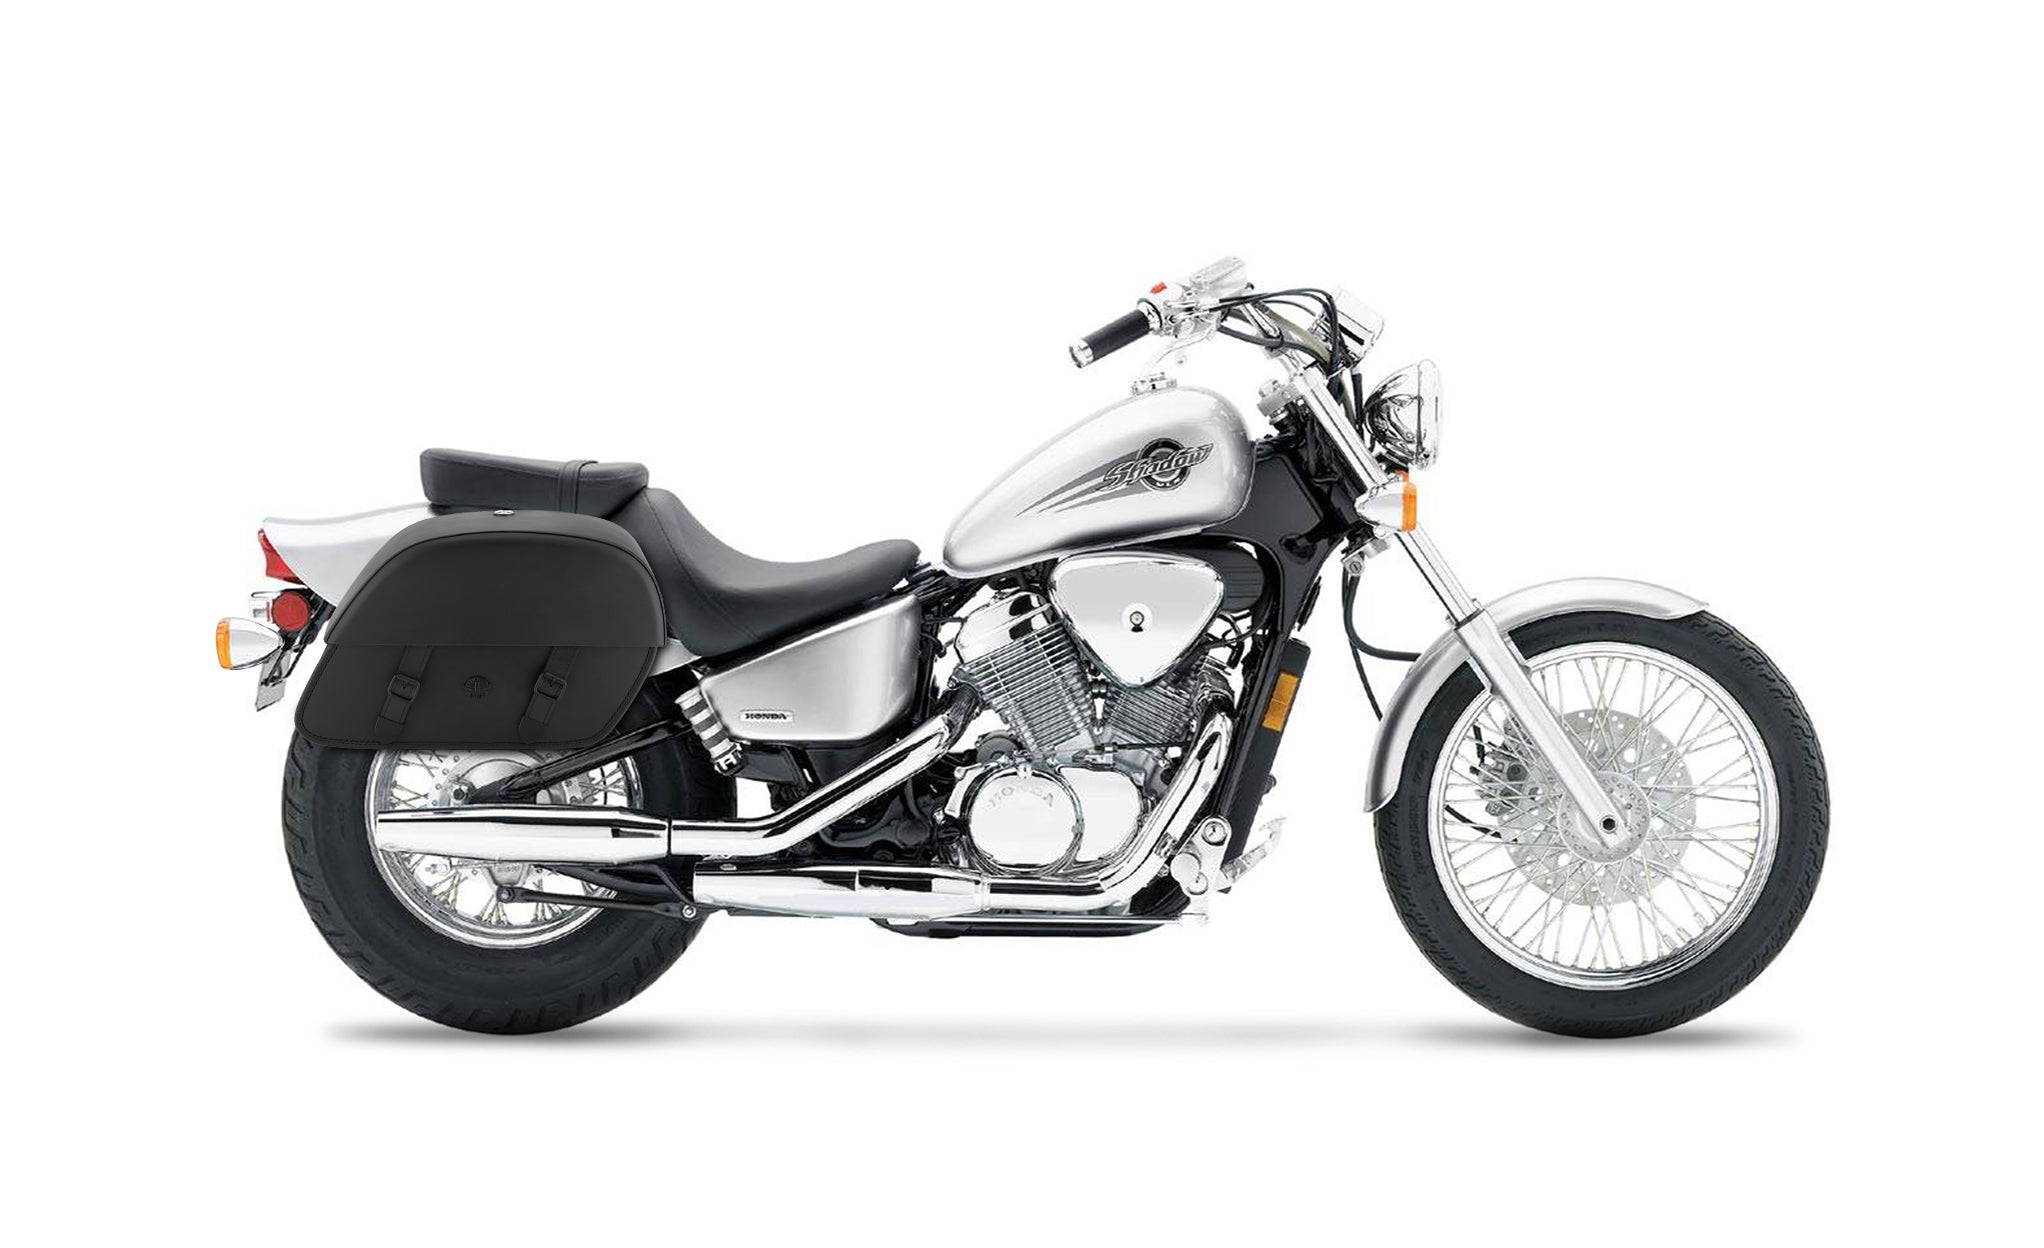 28L - Baelor Medium Shadow 600 VLX Motorcycle Saddlebags @expand